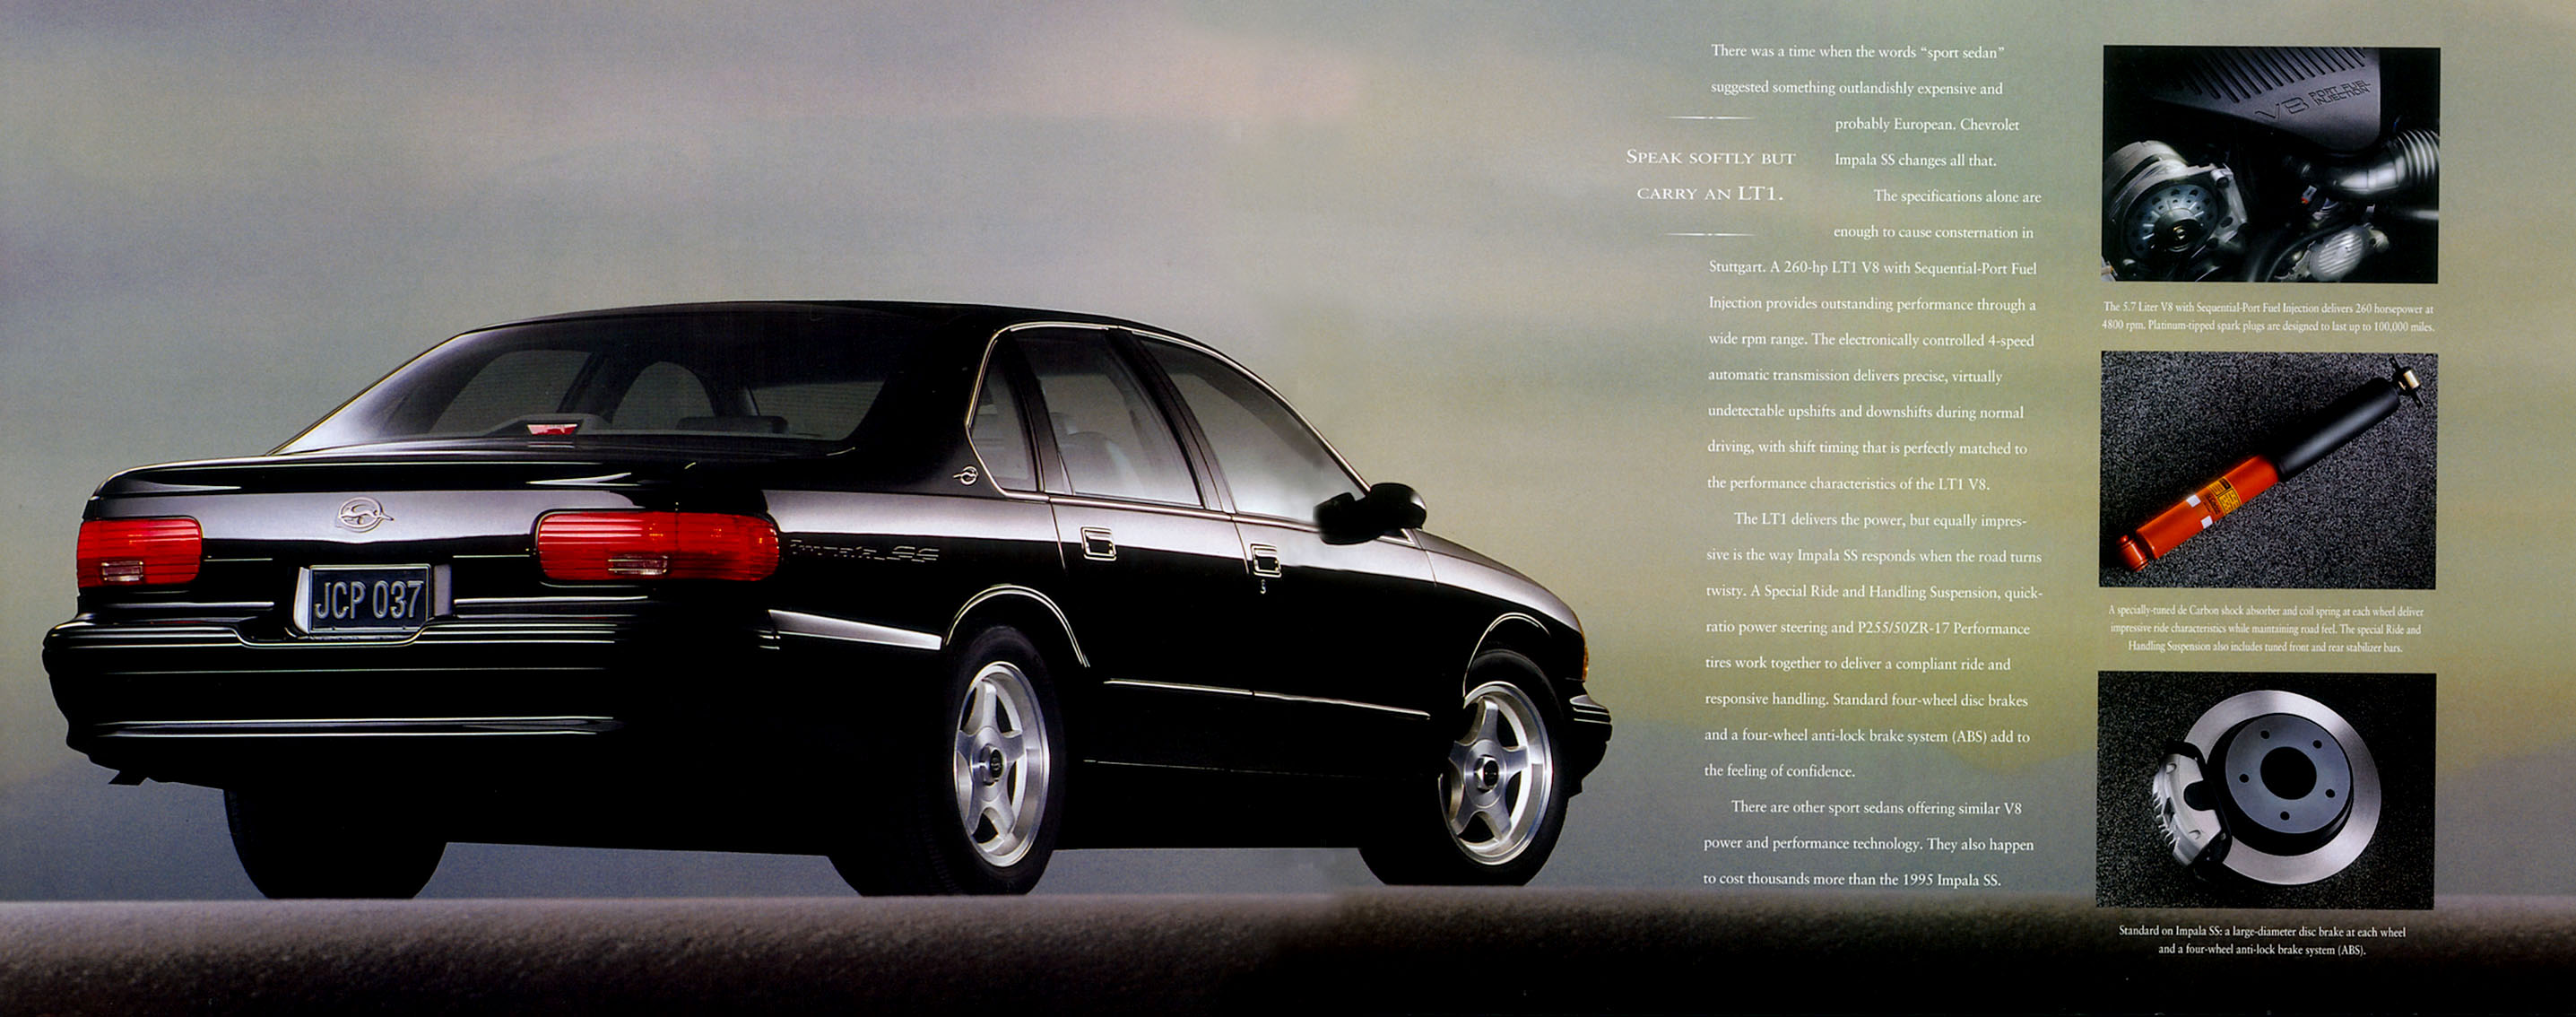 1995_Chevrolet_Impala_SS-04-05